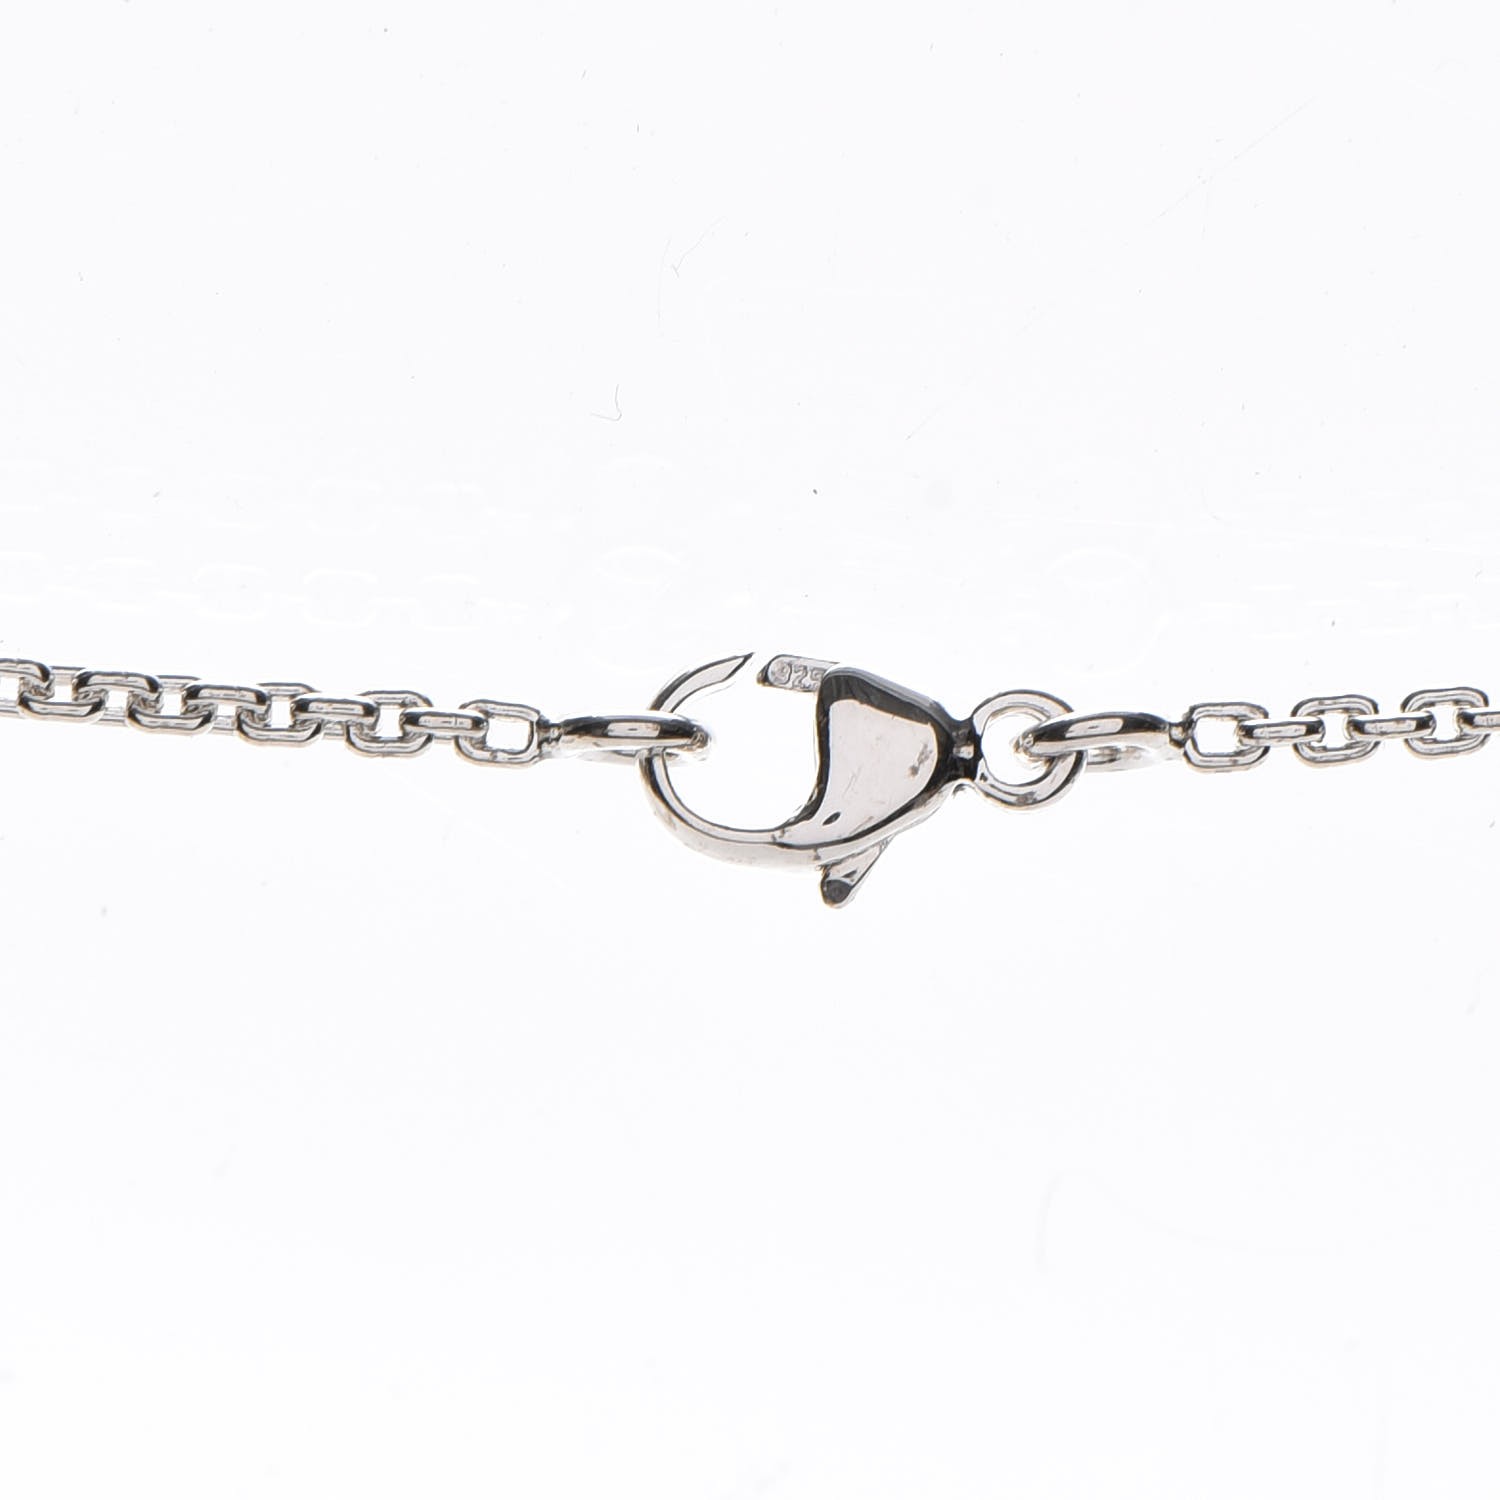 LOUIS VUITTON Silver Lockit Pendant Q93559 Sterling Silver Chain Necklace  w/ Box